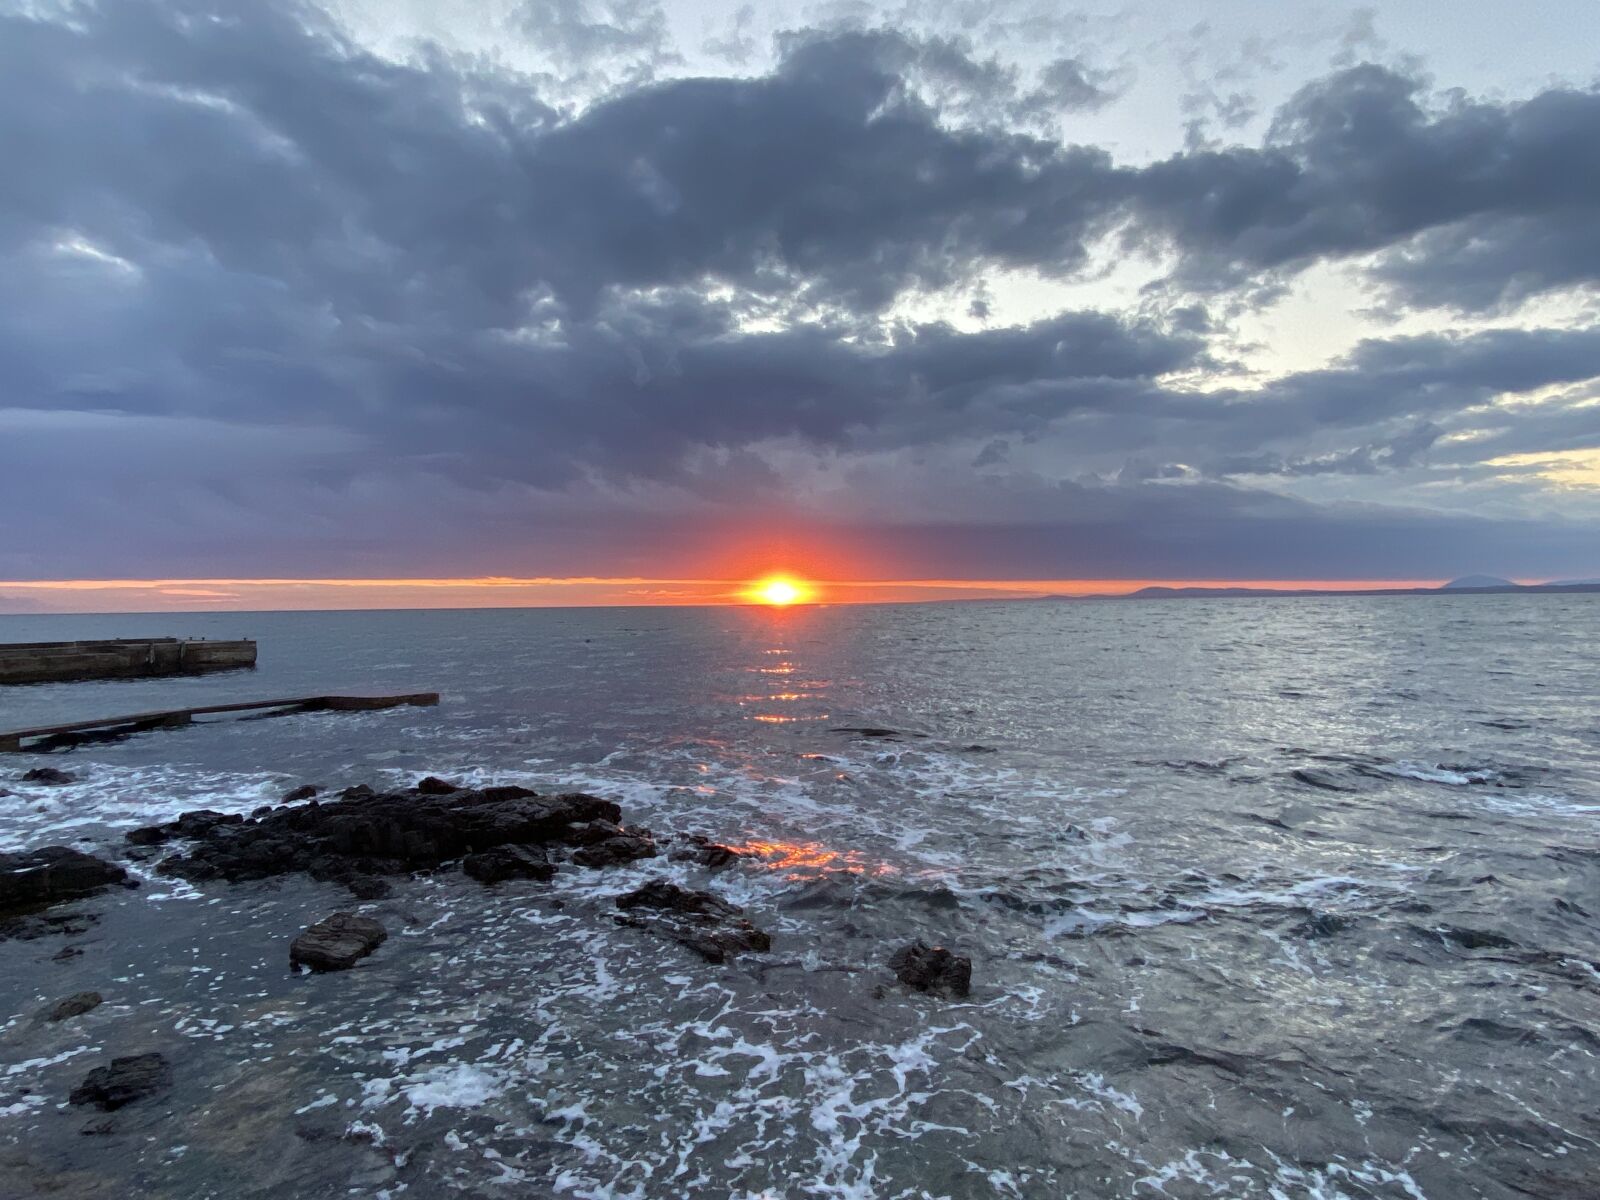 iPhone 11 Pro back triple camera 1.54mm f/2.4 sample photo. Sea, sunset, sky photography